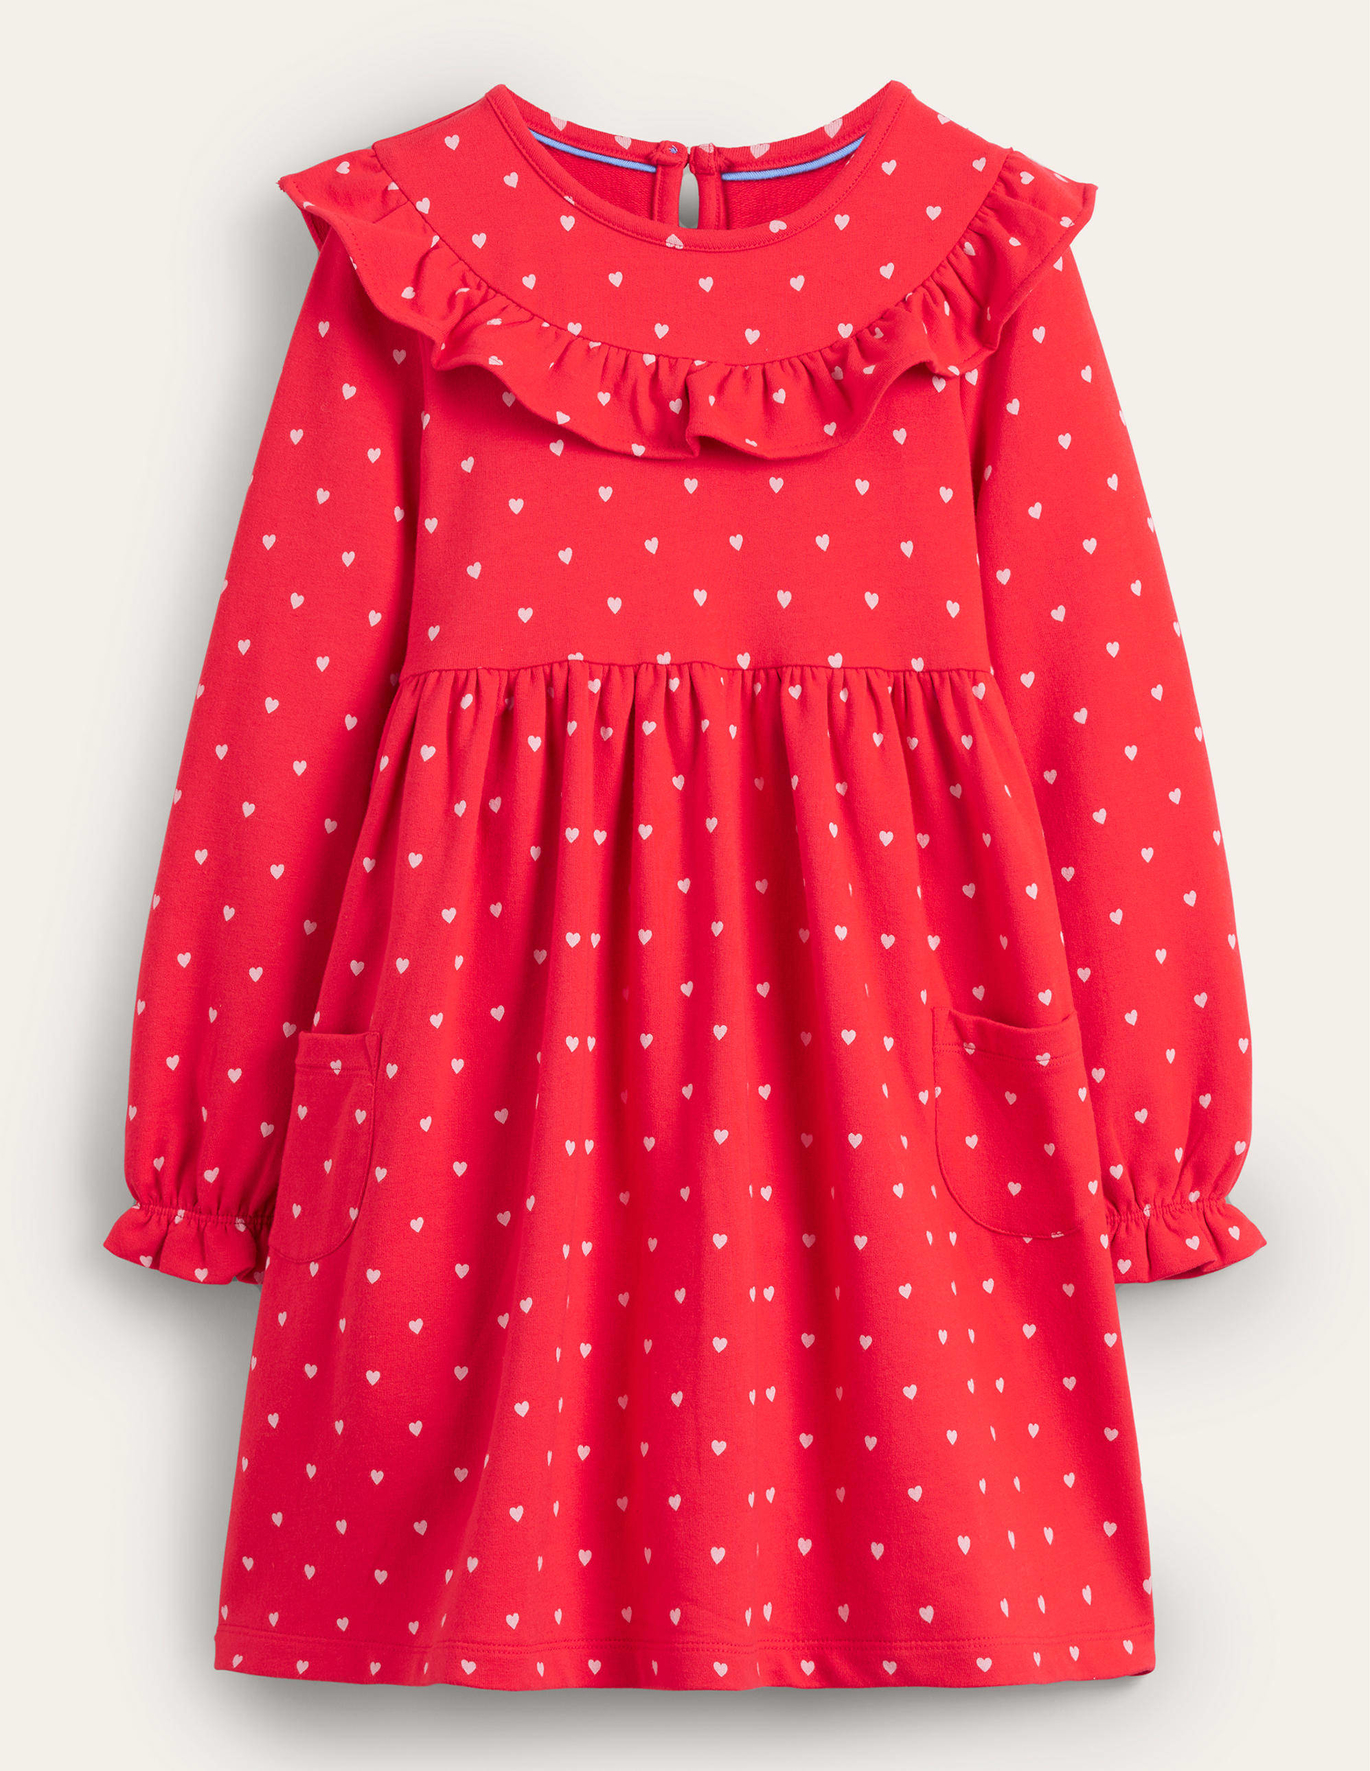 Boden Jersey Lace Yoke Dress - Strawberry Tart Tiny Hearts